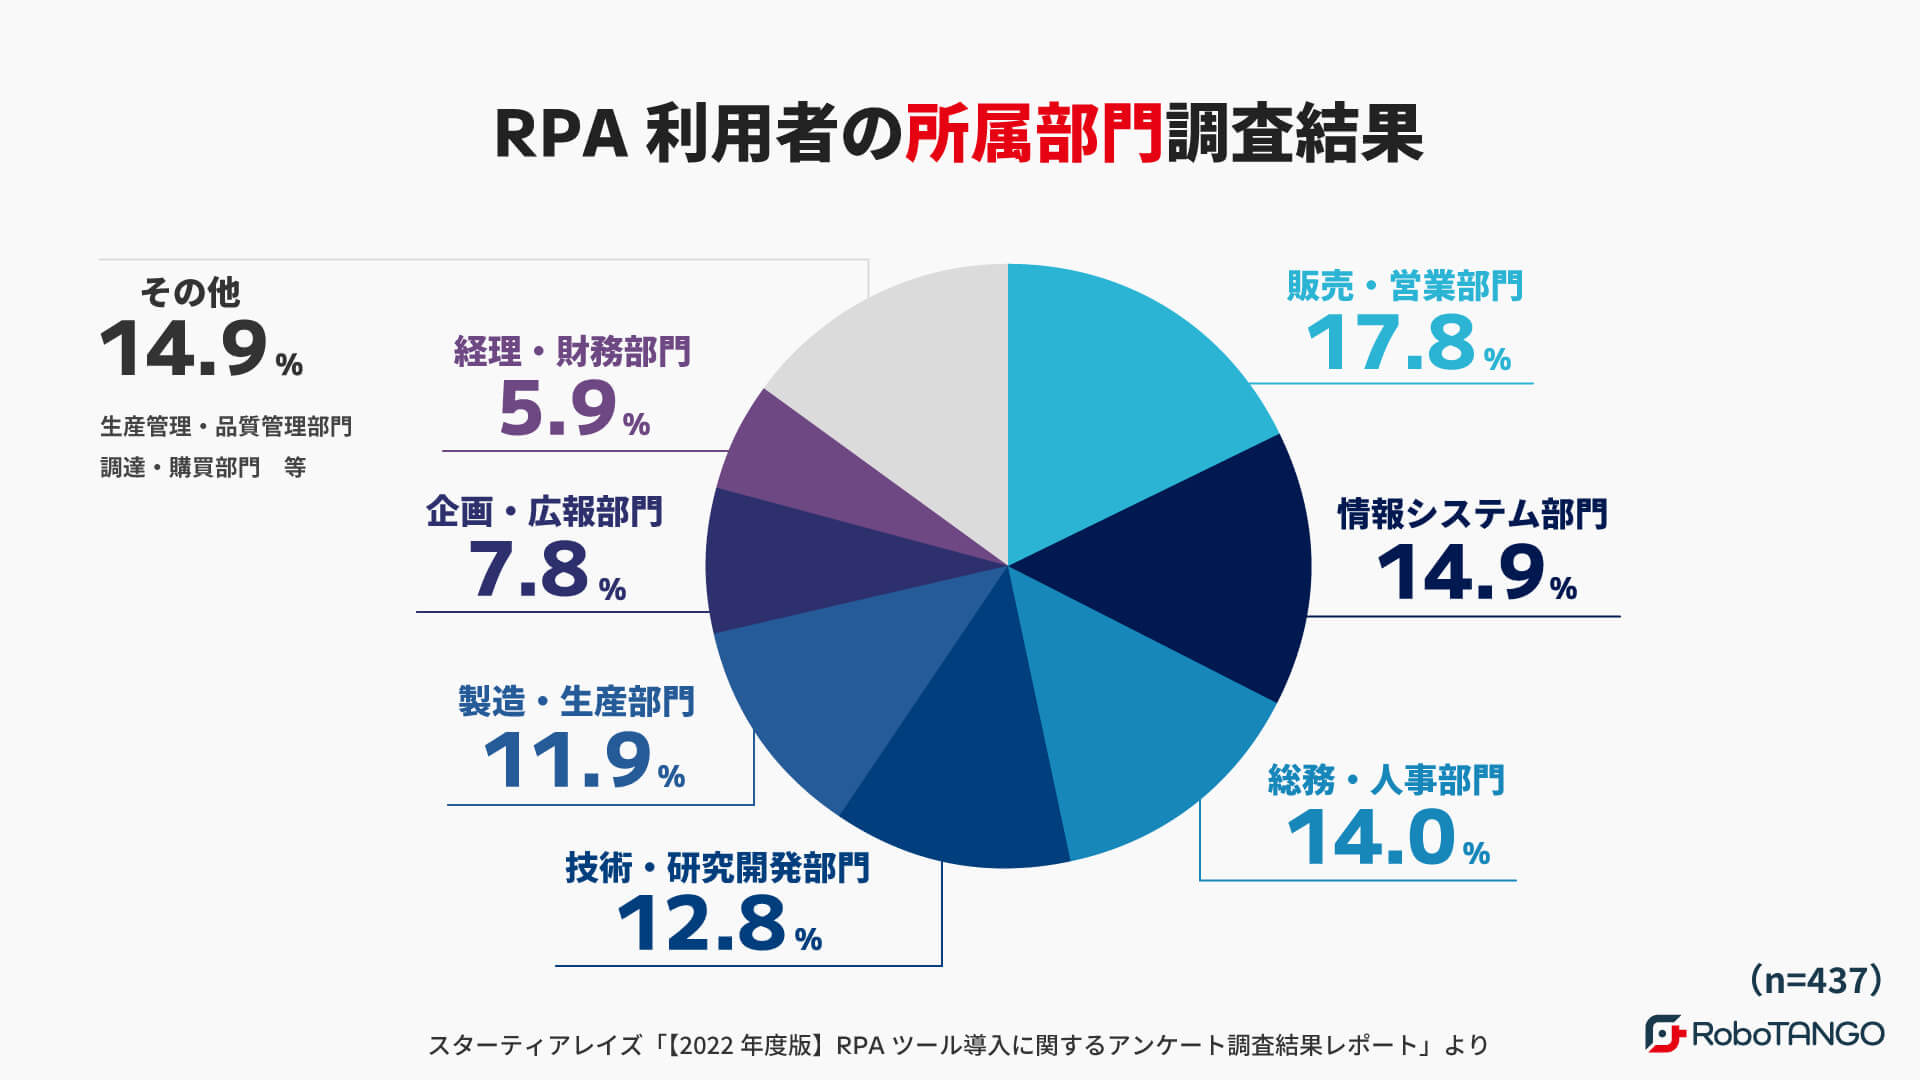 RPA利用者の所属部門の調査結果を解説したグラフ